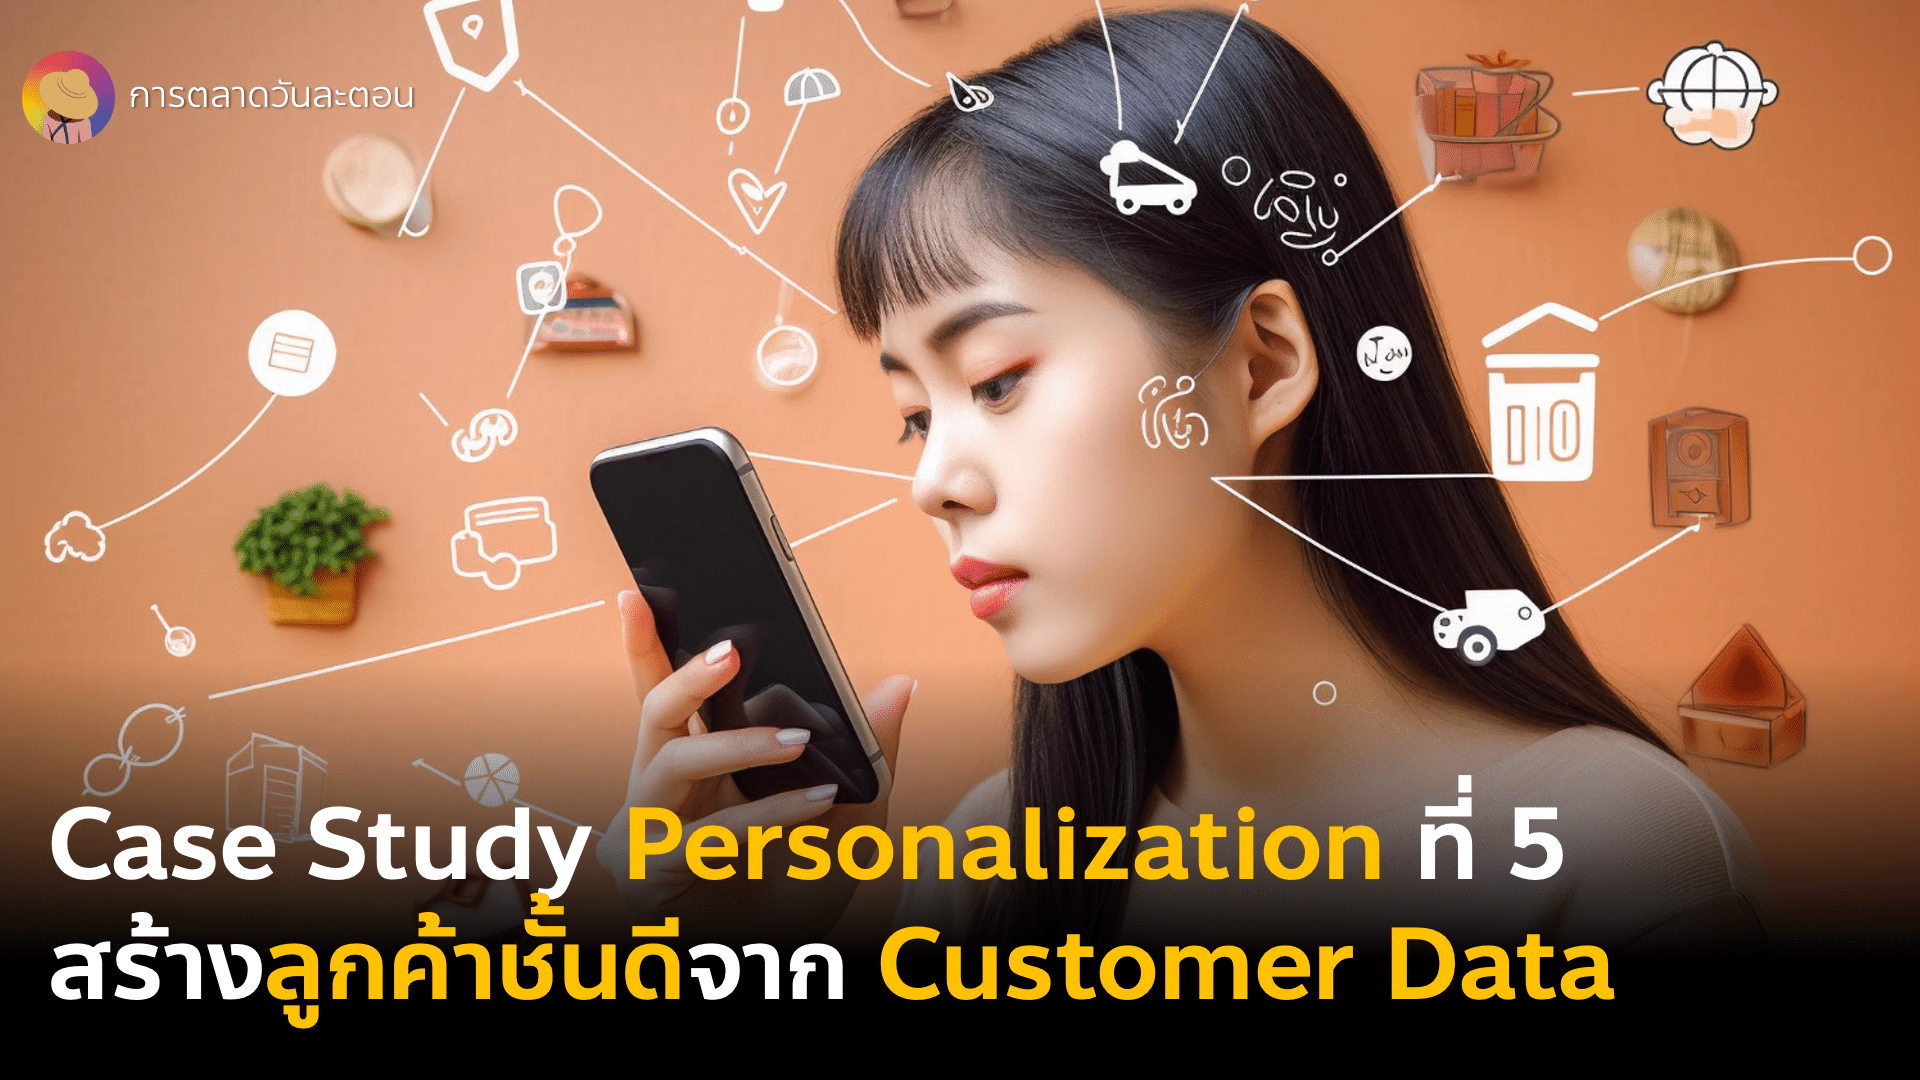 Case Study Personalization เปลี่ยนลูกค้าธรรมดาเป็นลูกค้าชั้นดีด้วย Customer Data